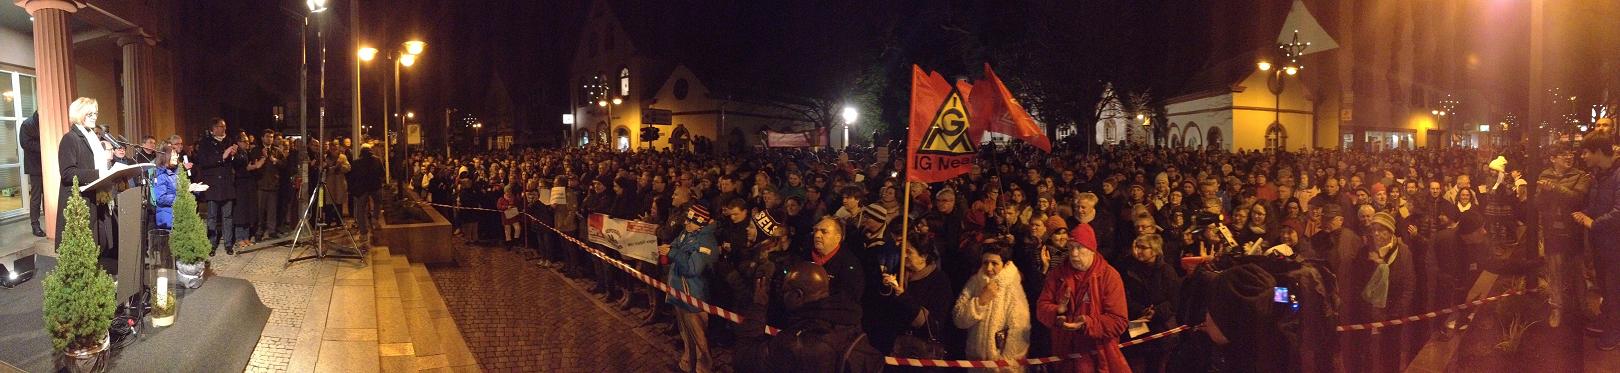 Kundgebung Herxheim 11.12.2015 Brand Flüchtlingsunterkünfte